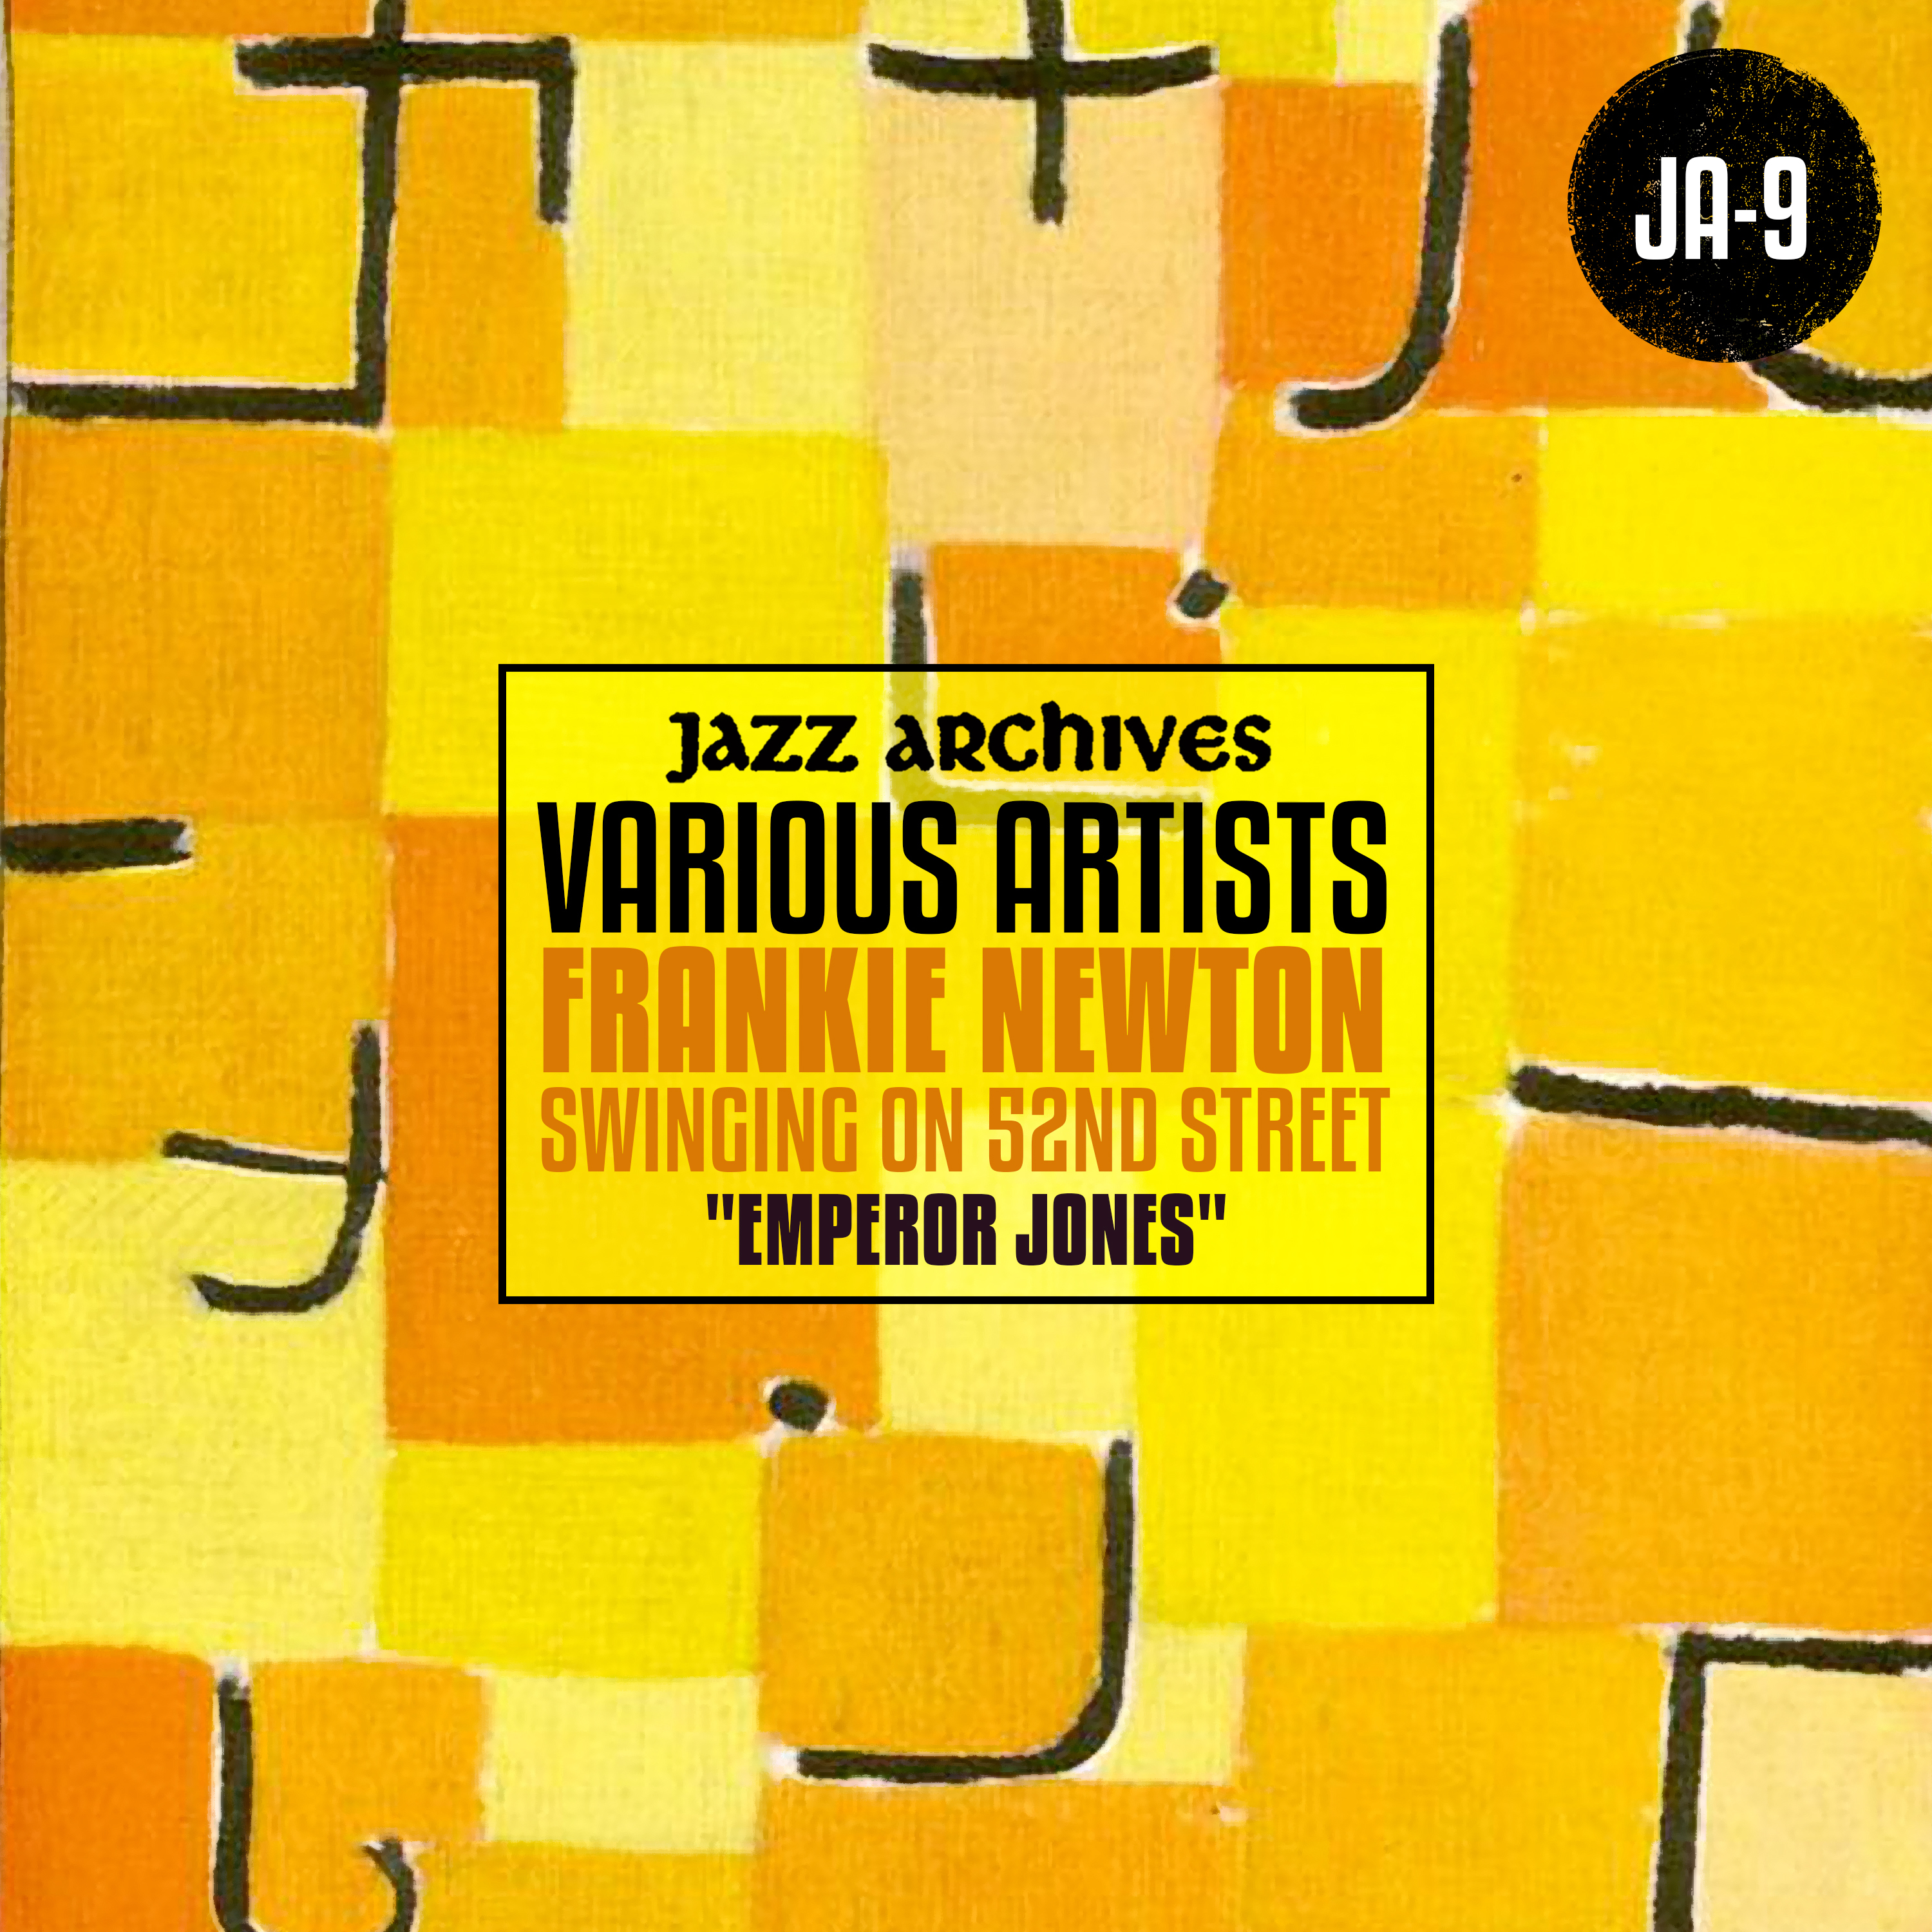 Jazz Archives Presents: Frankie Newton Swinging on 52nd Street "Emperor Jones" (1937-1939)